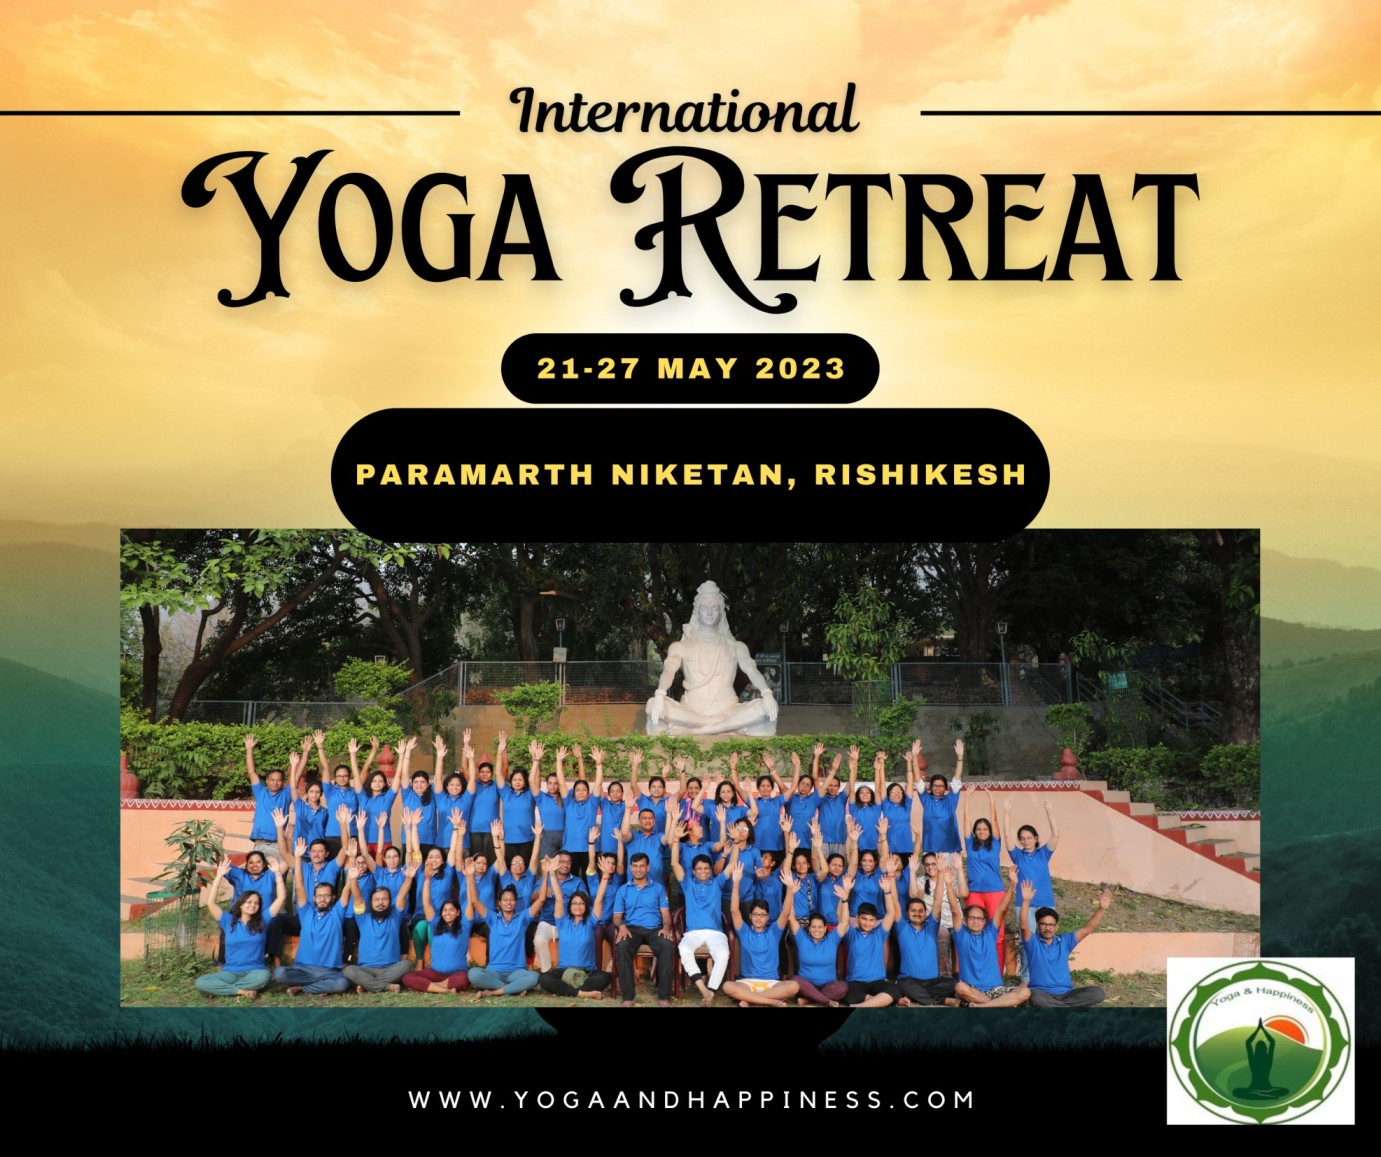 International Yoga Retreat at Parmath Niketan Rishikesh 2023